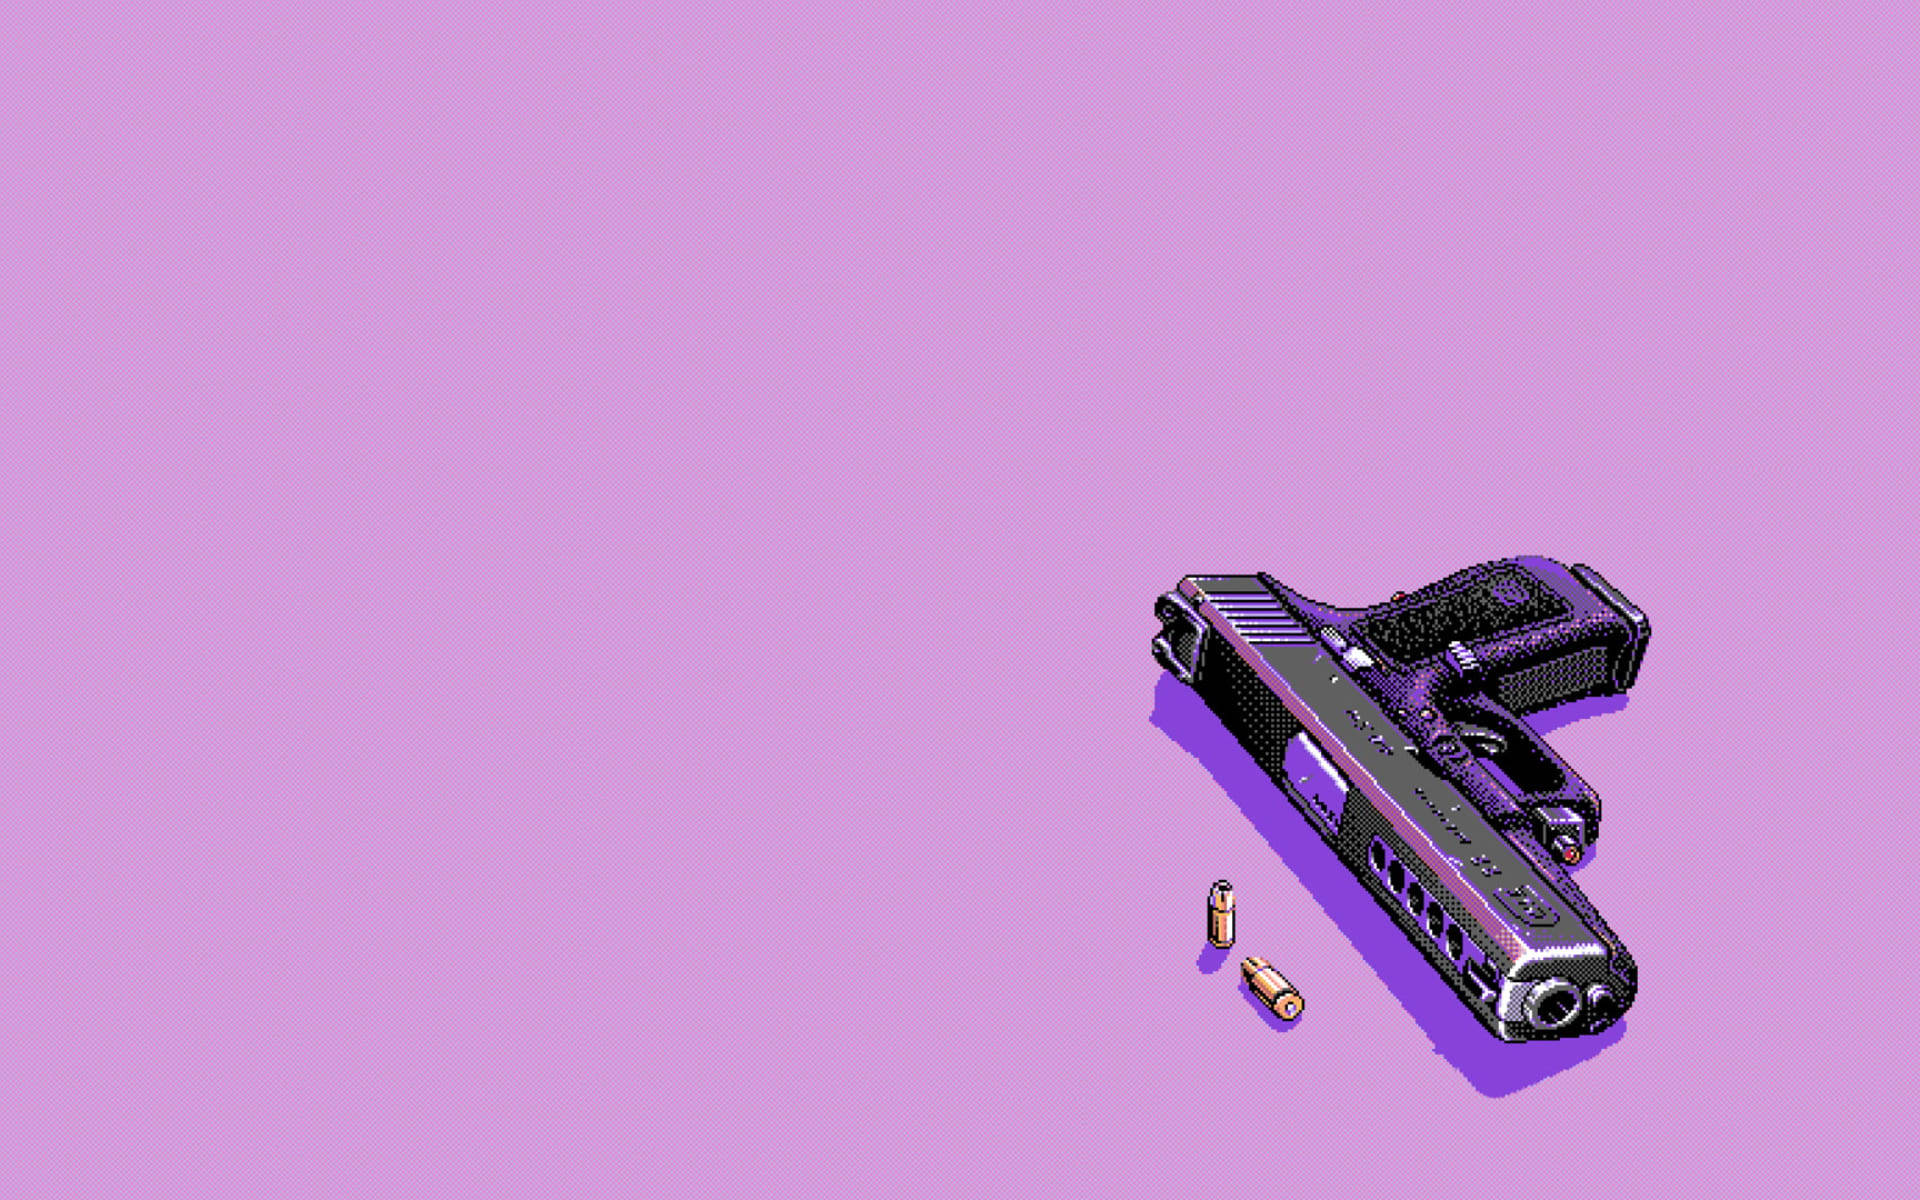 Retro 8-bit Glock Pistol Background